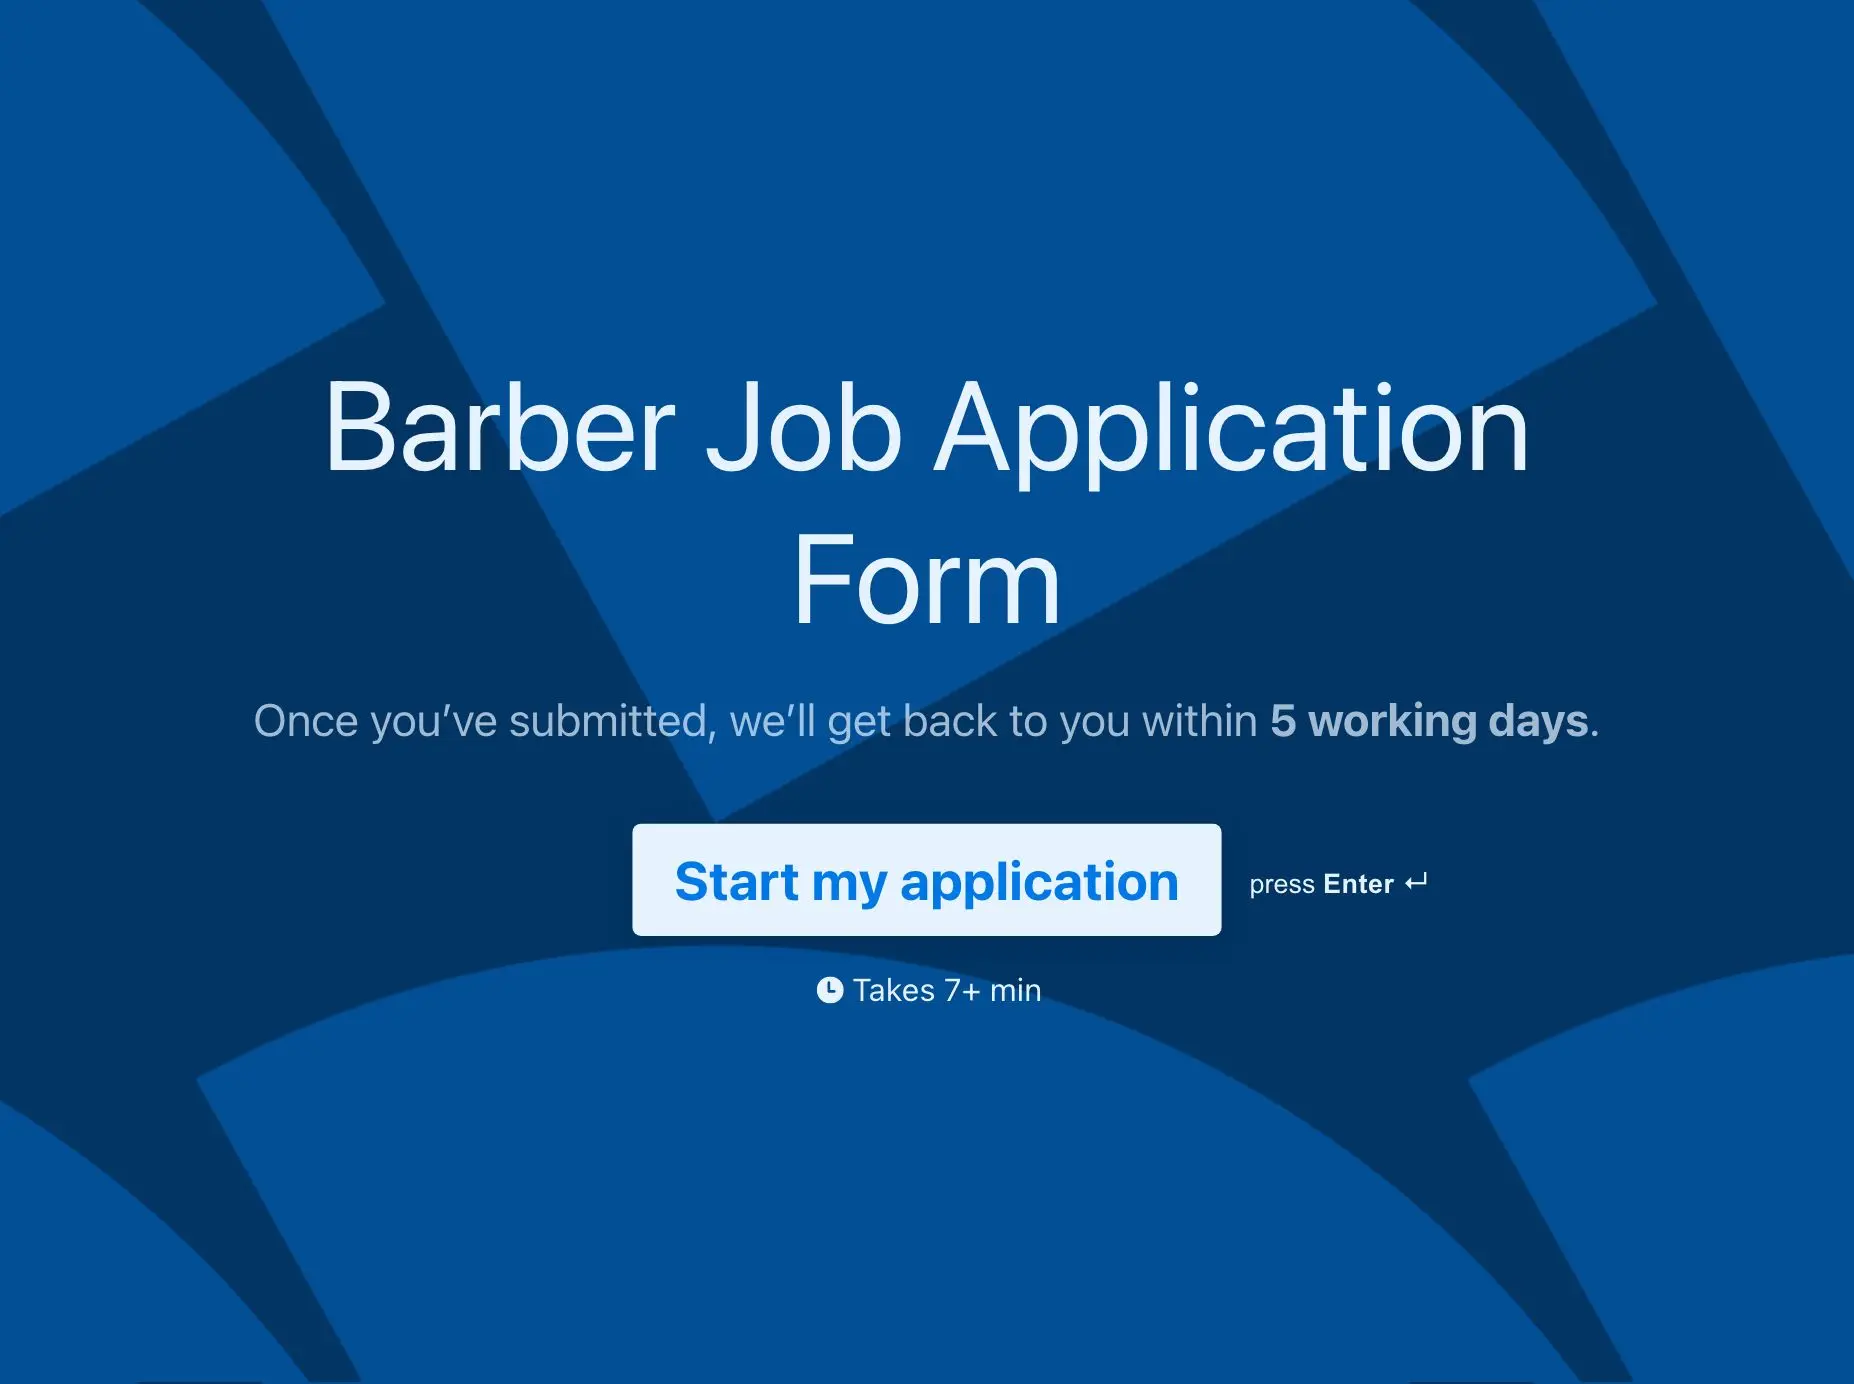 Barber Job Application Form Template Hero